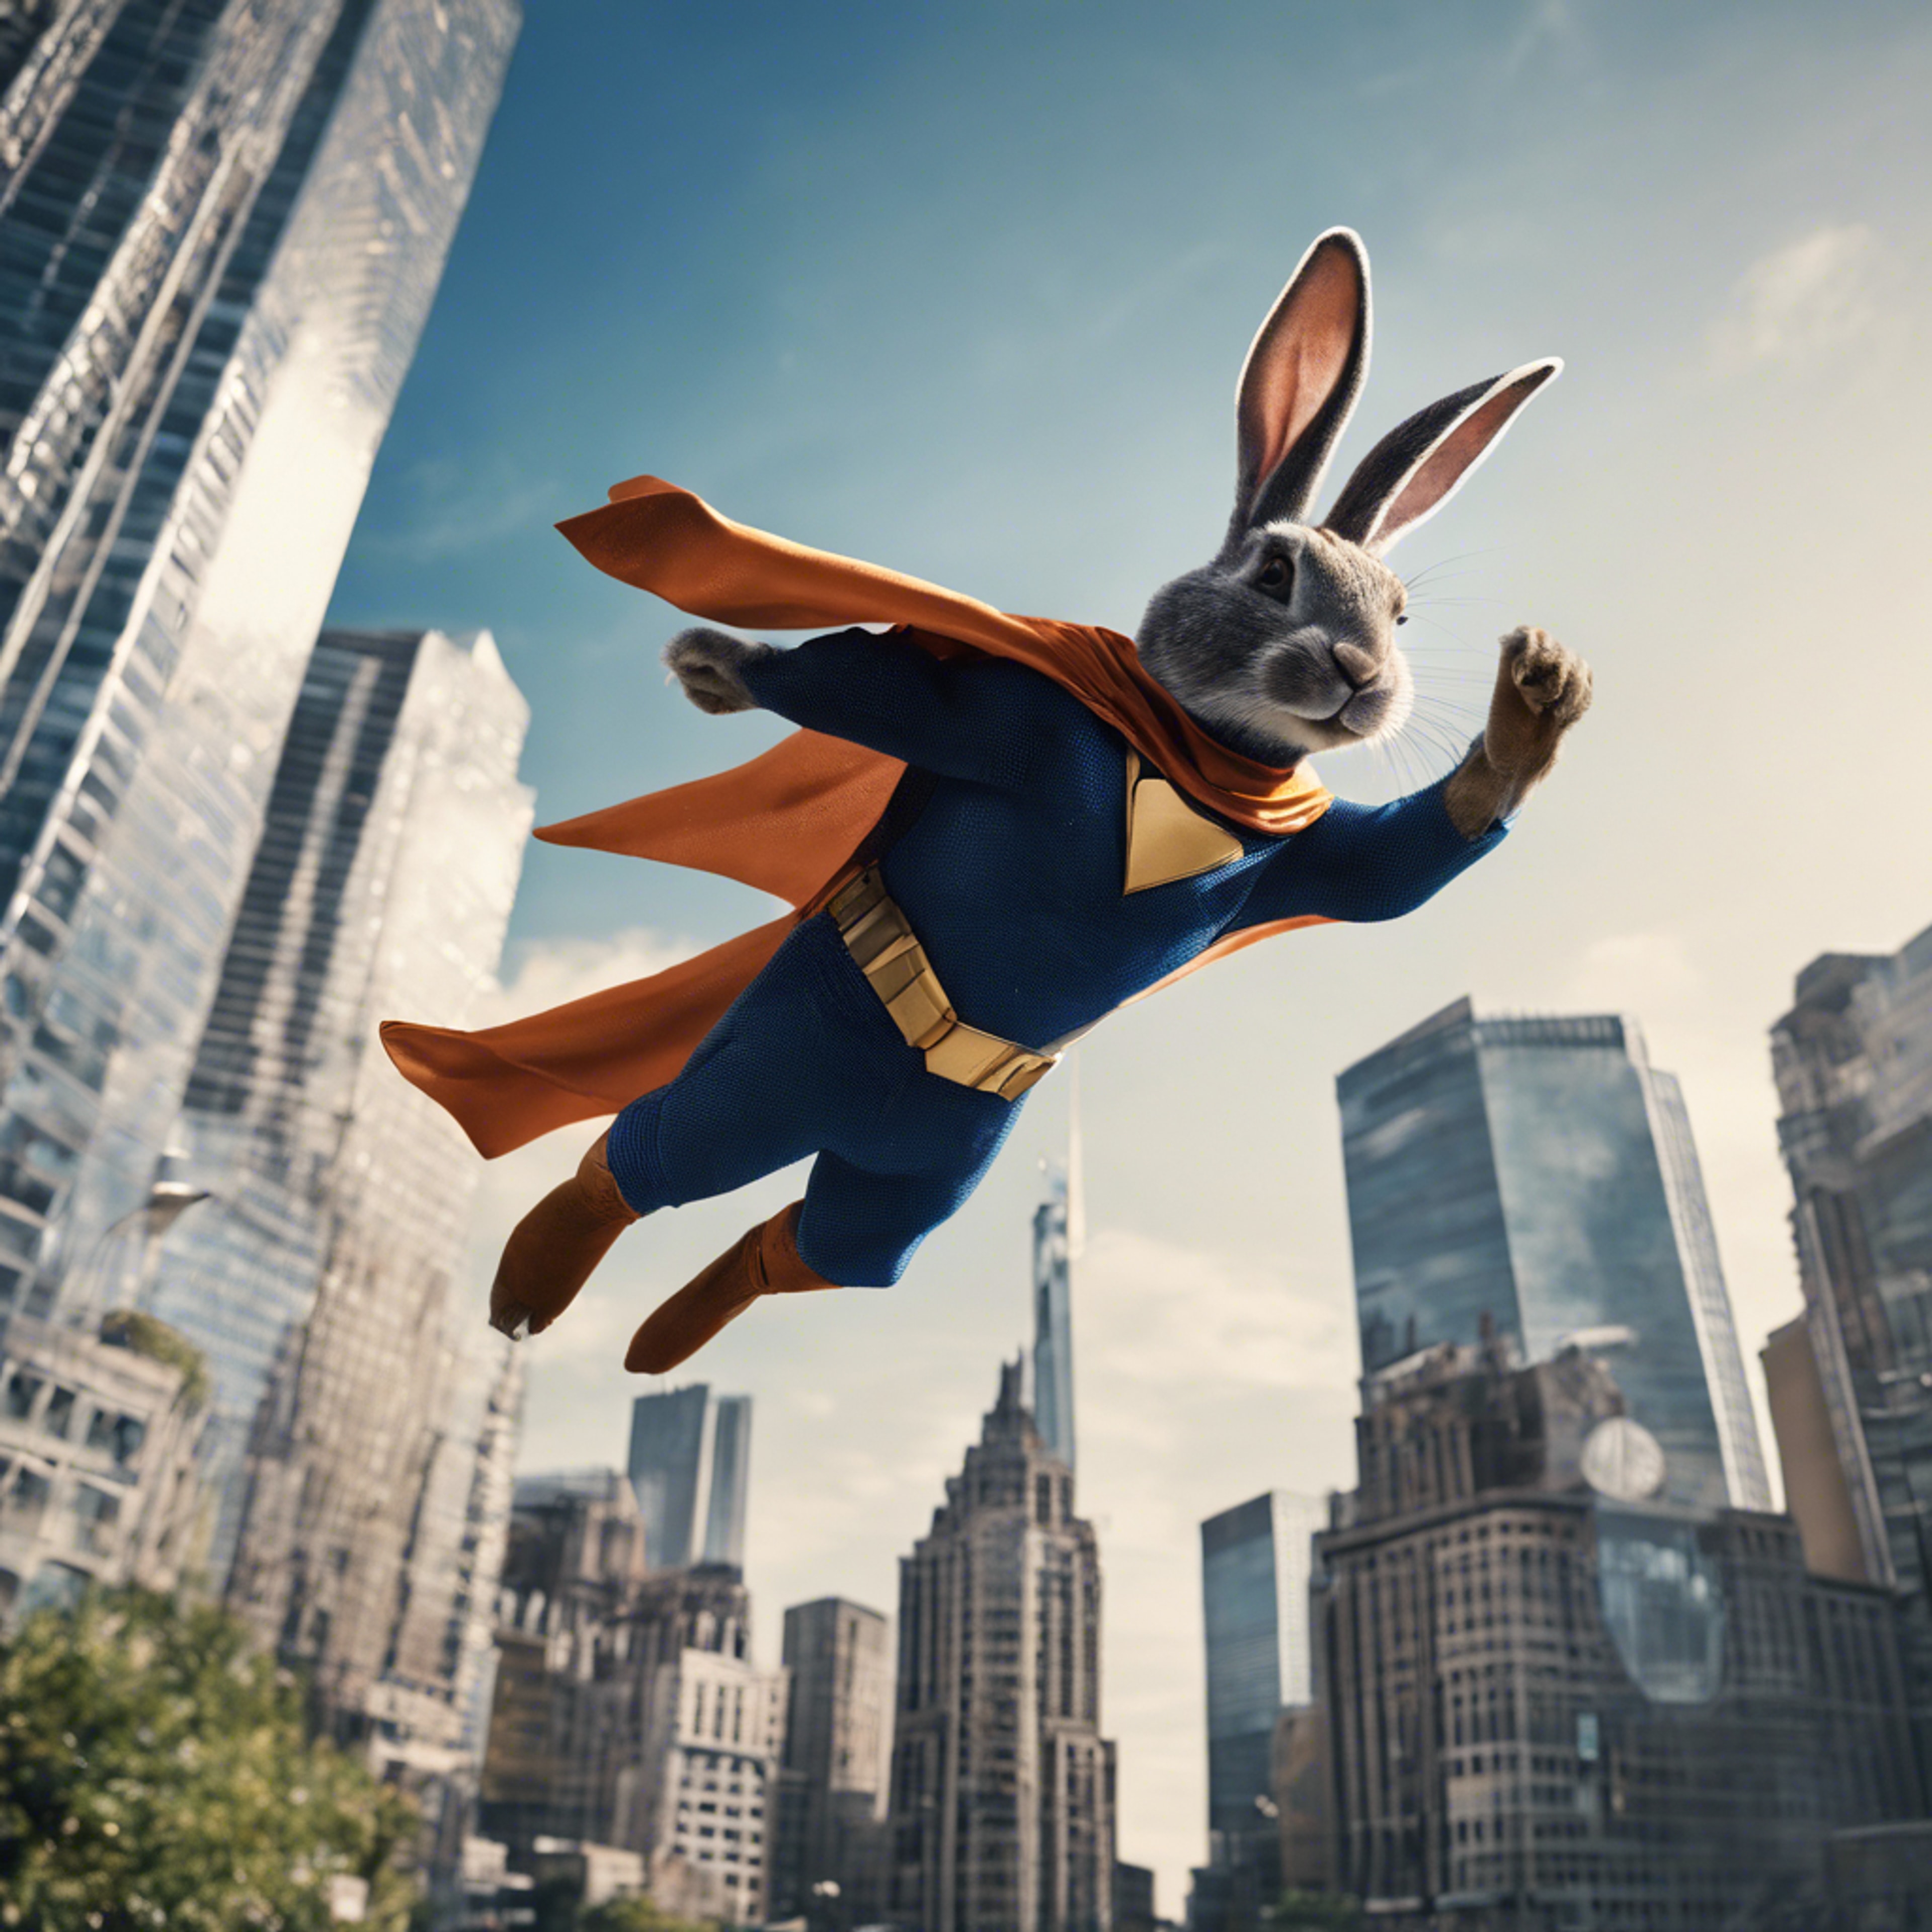 A rabbit superhero soaring above skyscrapers in a bustling city. Обои[841b91138e24419cbc55]